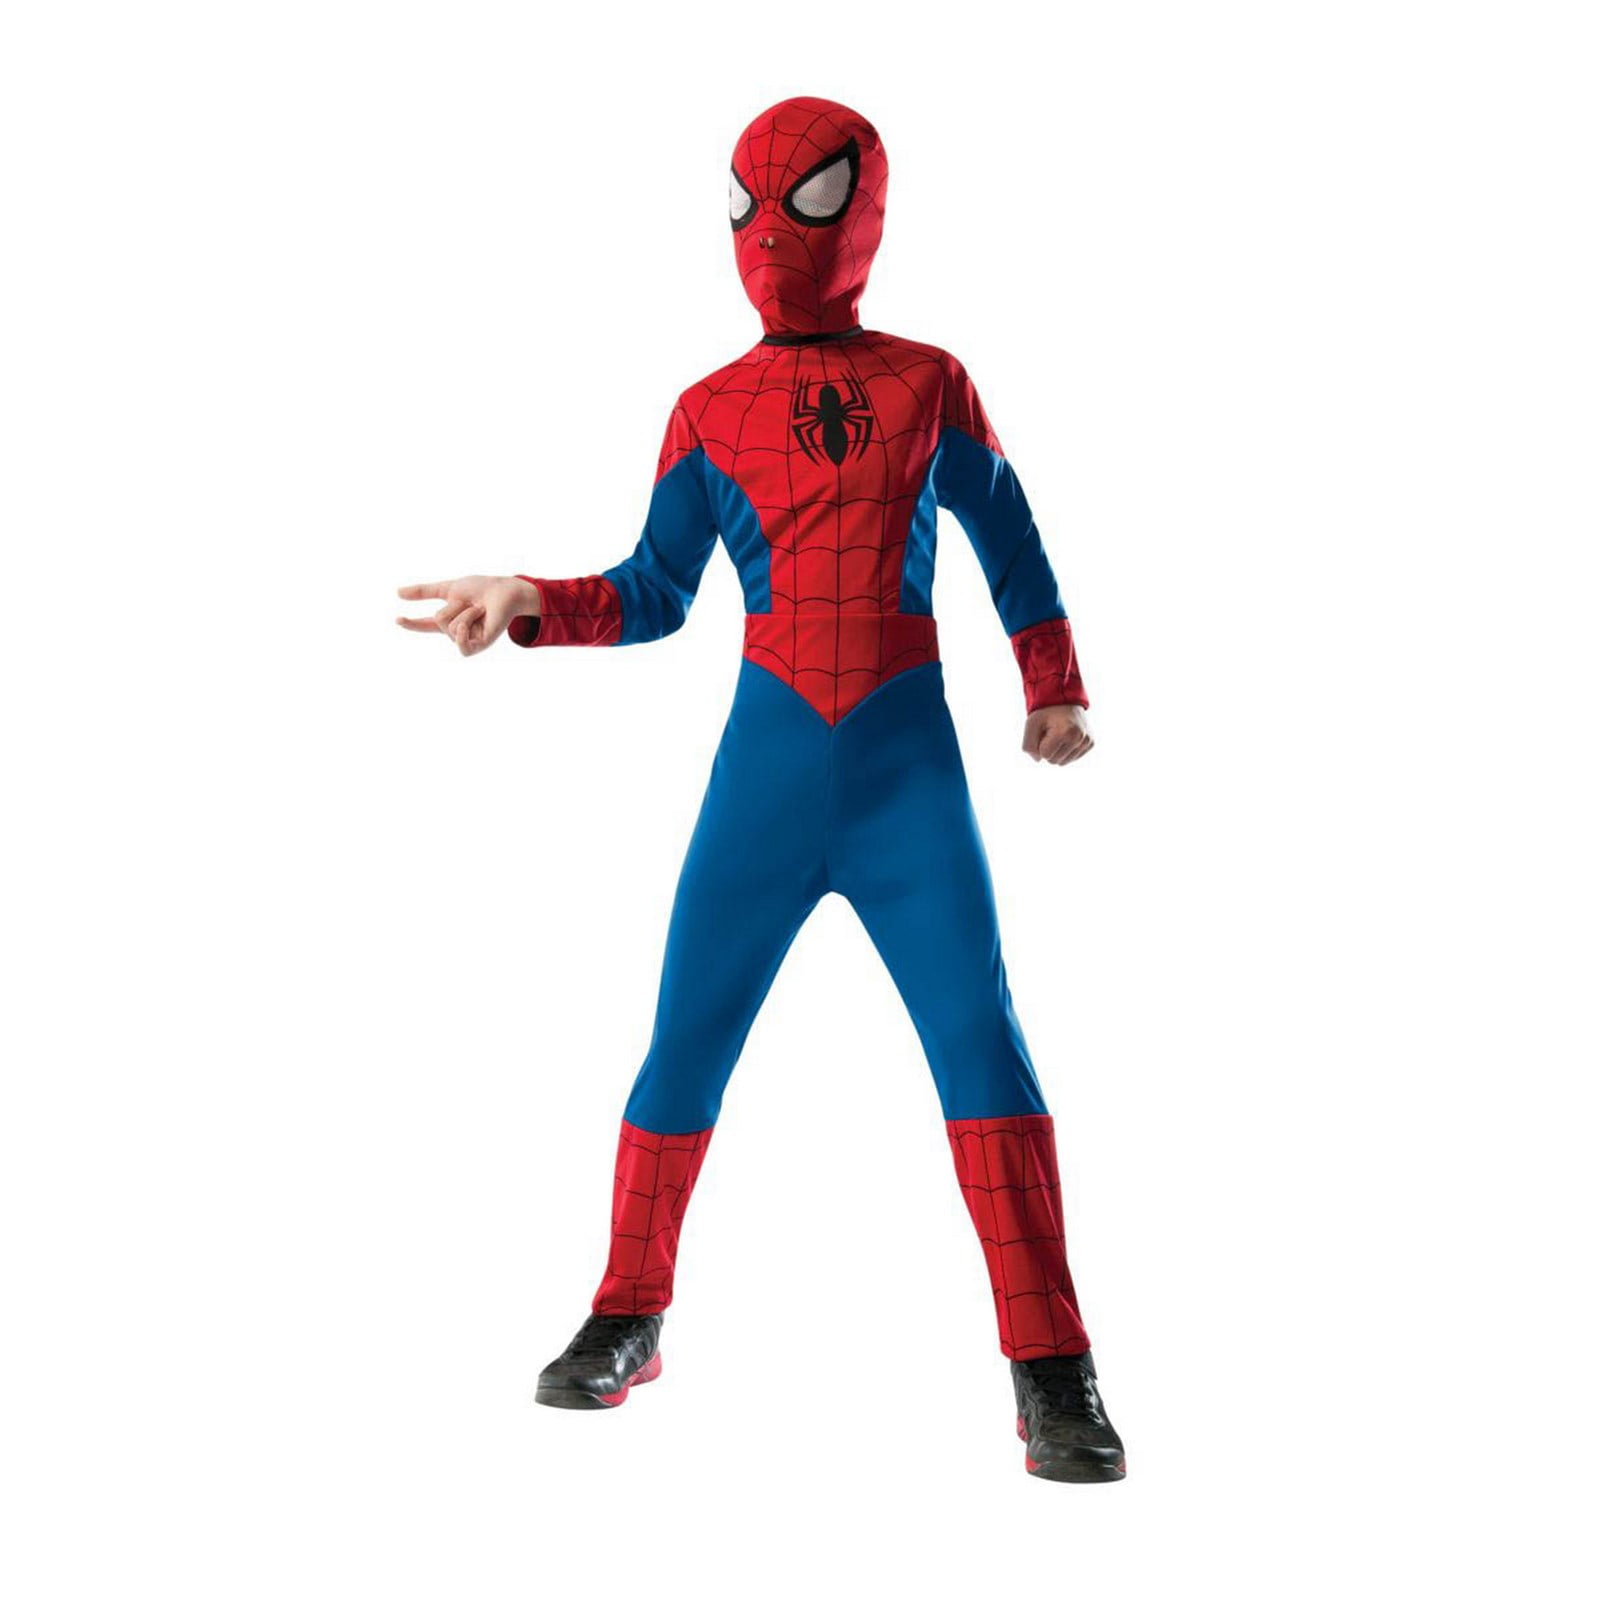 Custom Spider-Man Jeans Spider-Man Distressed Jeans Spider-Man Outfit Spider-Man Frayed Jeans Spider-Man Birthday